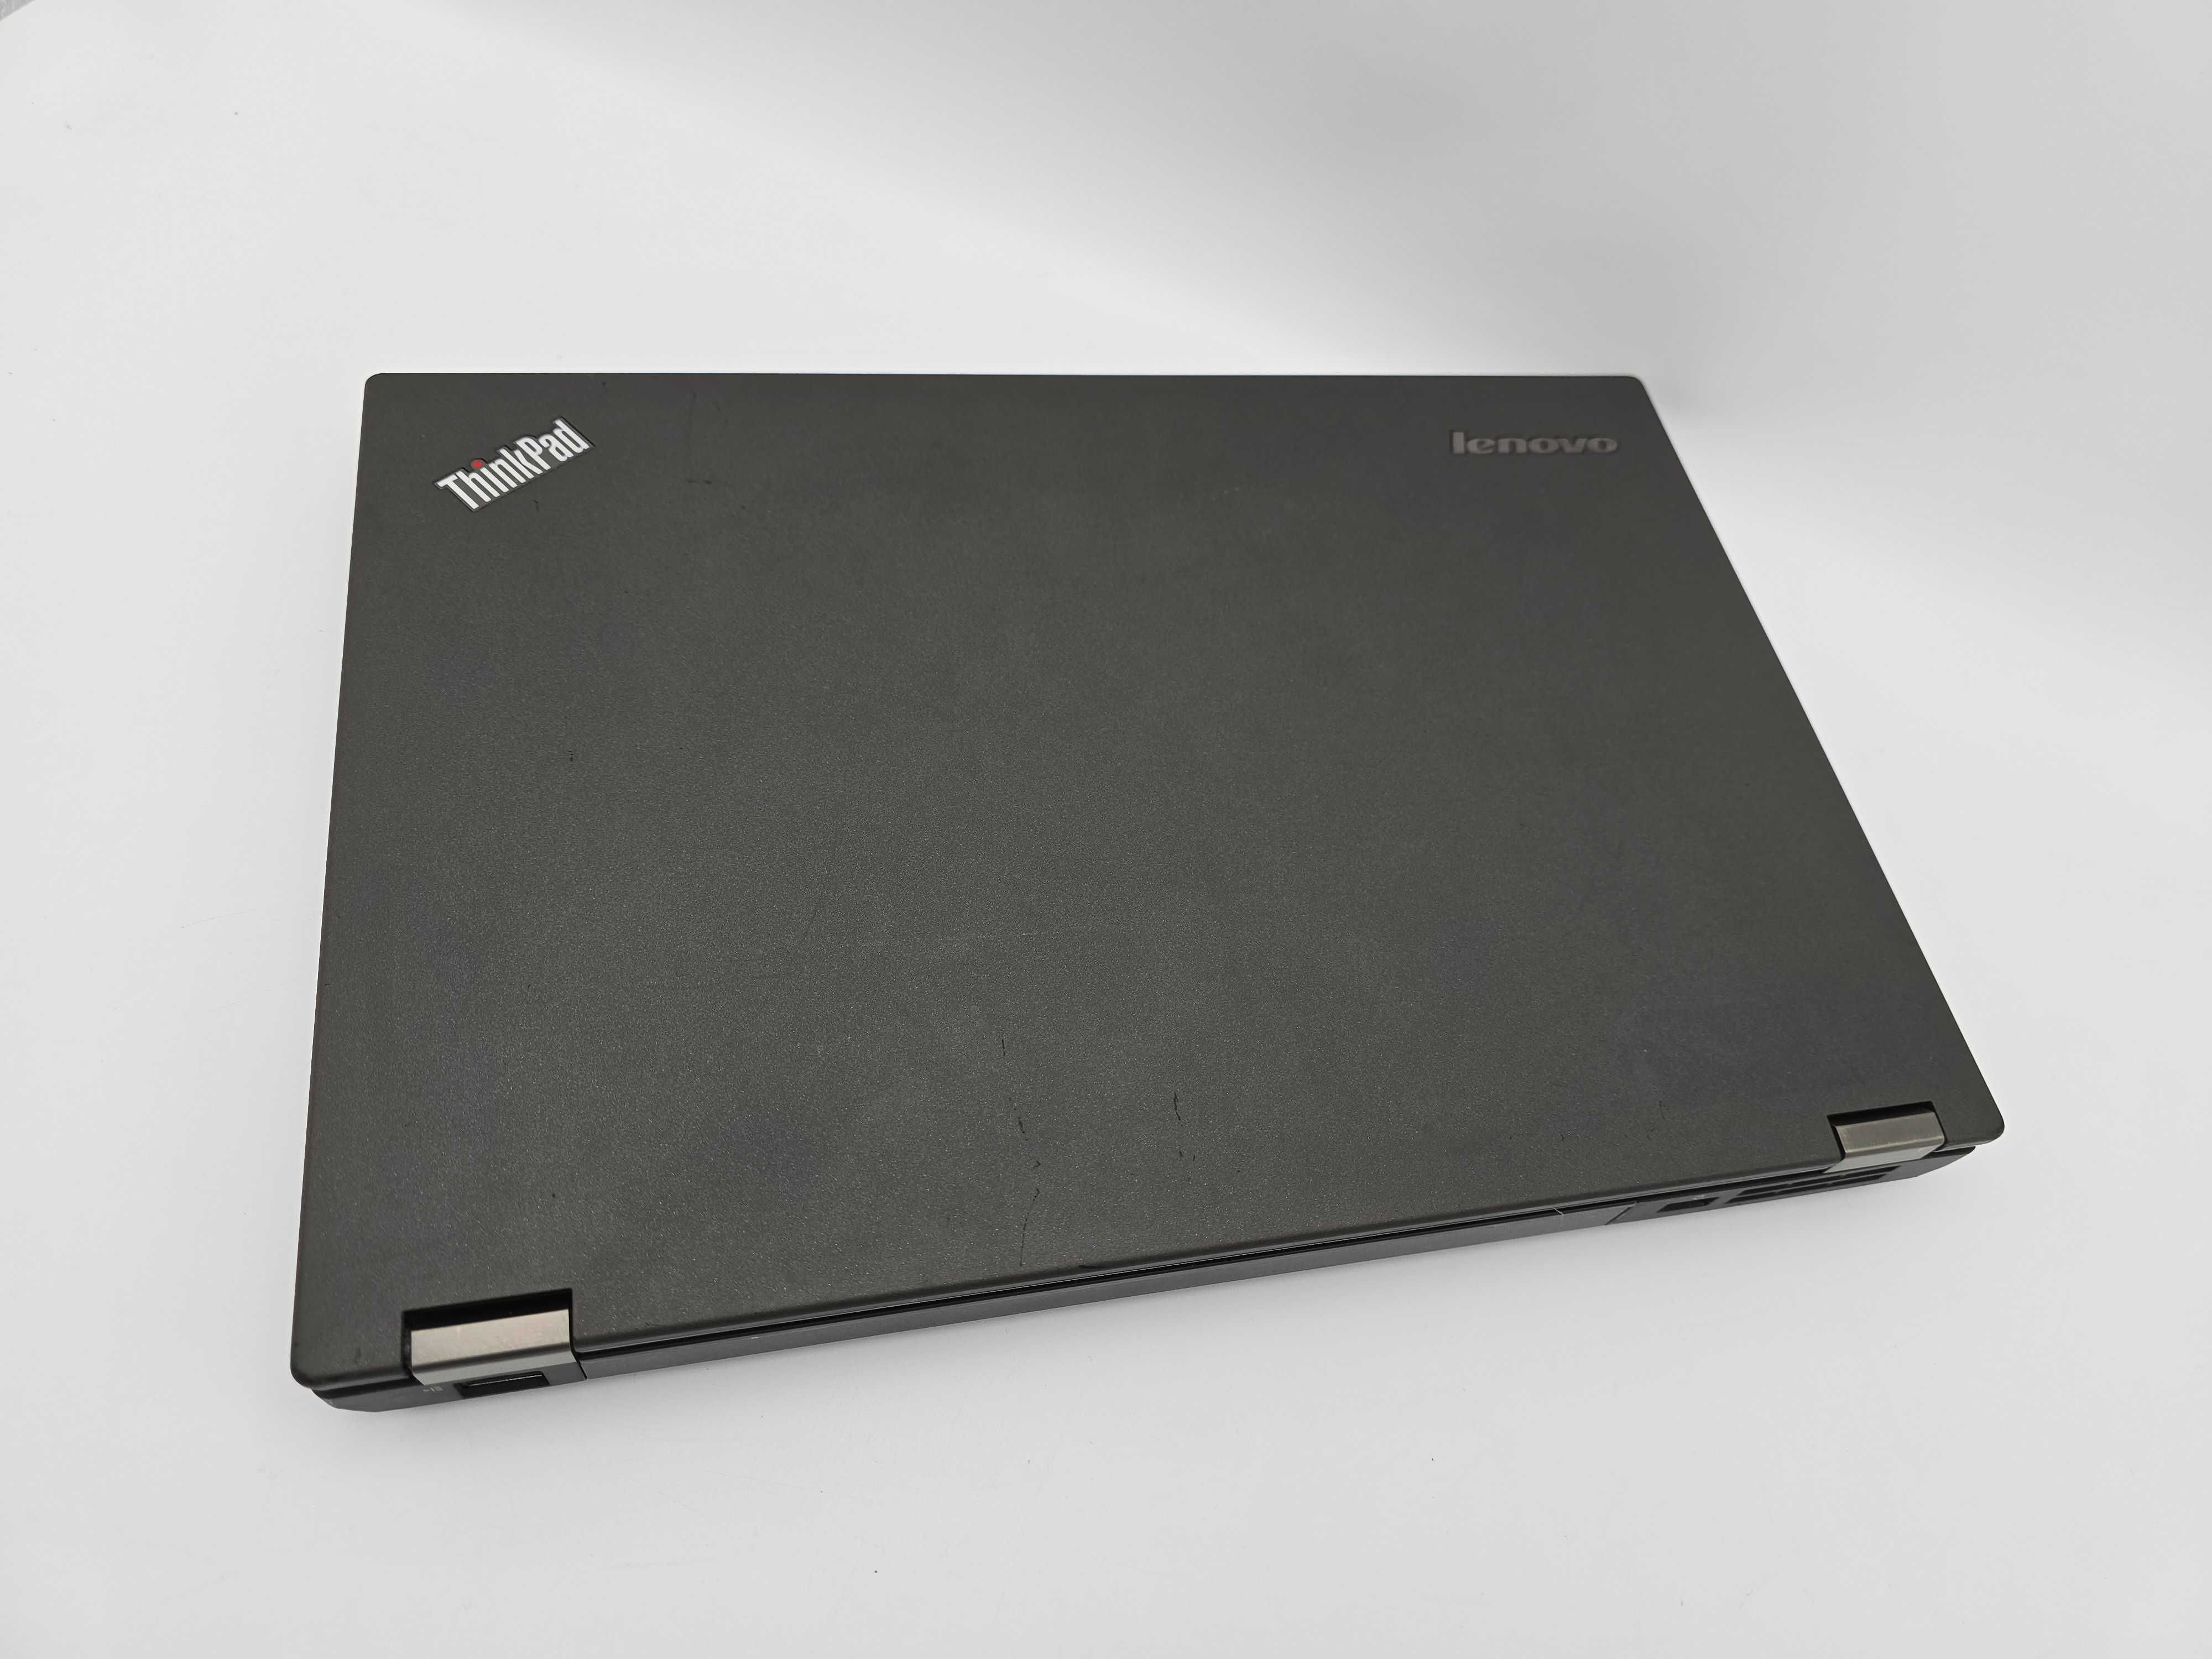 Laptop 14" Lenovo ThinkPad T440p i7-4800MQ 2.7Ghz 16GB DDR3 240GB SSD